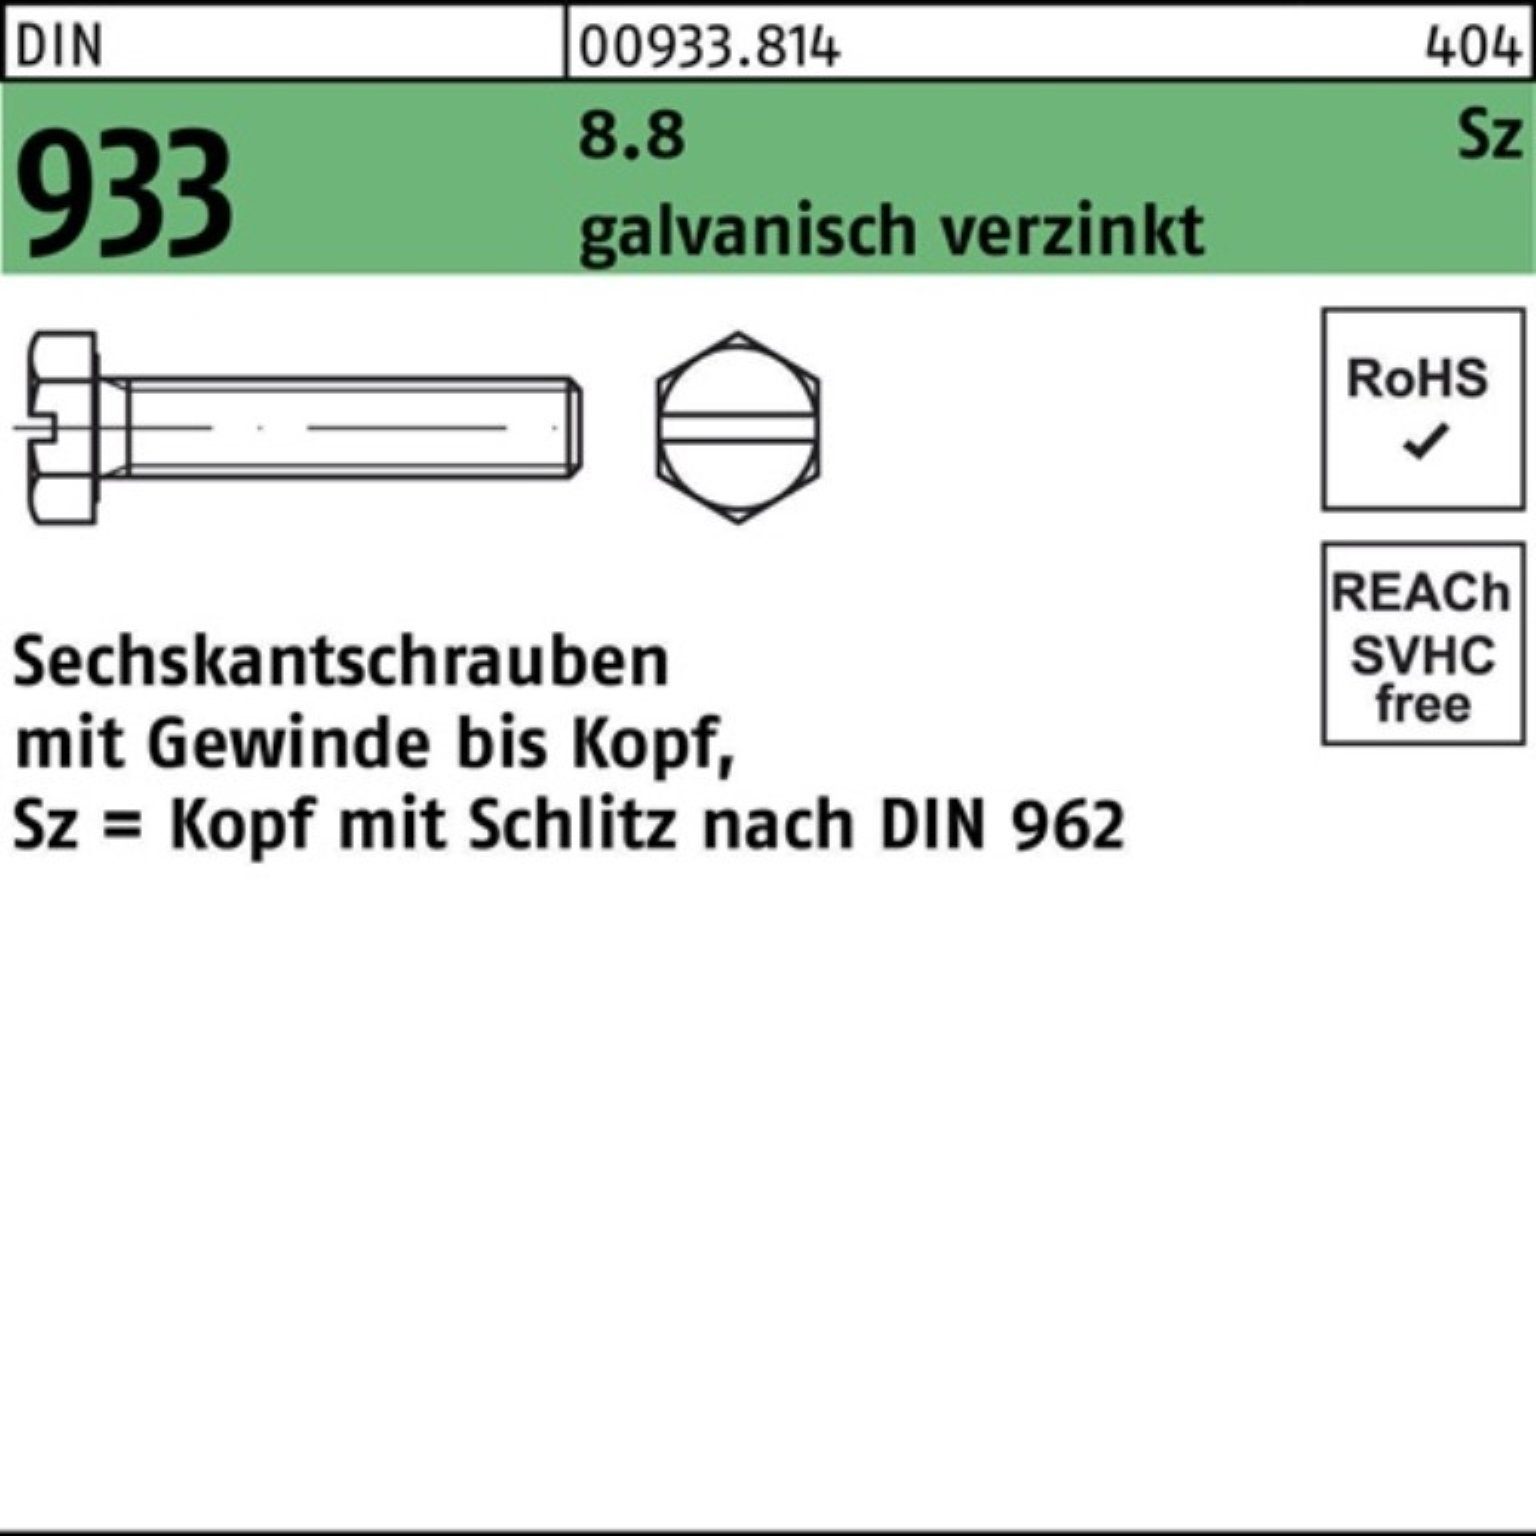 Sechskantschraube 8.8 Sechskantschraube Reyher galv.verz. 22 DIN VG/Schlitz 933 500er M6x Pack